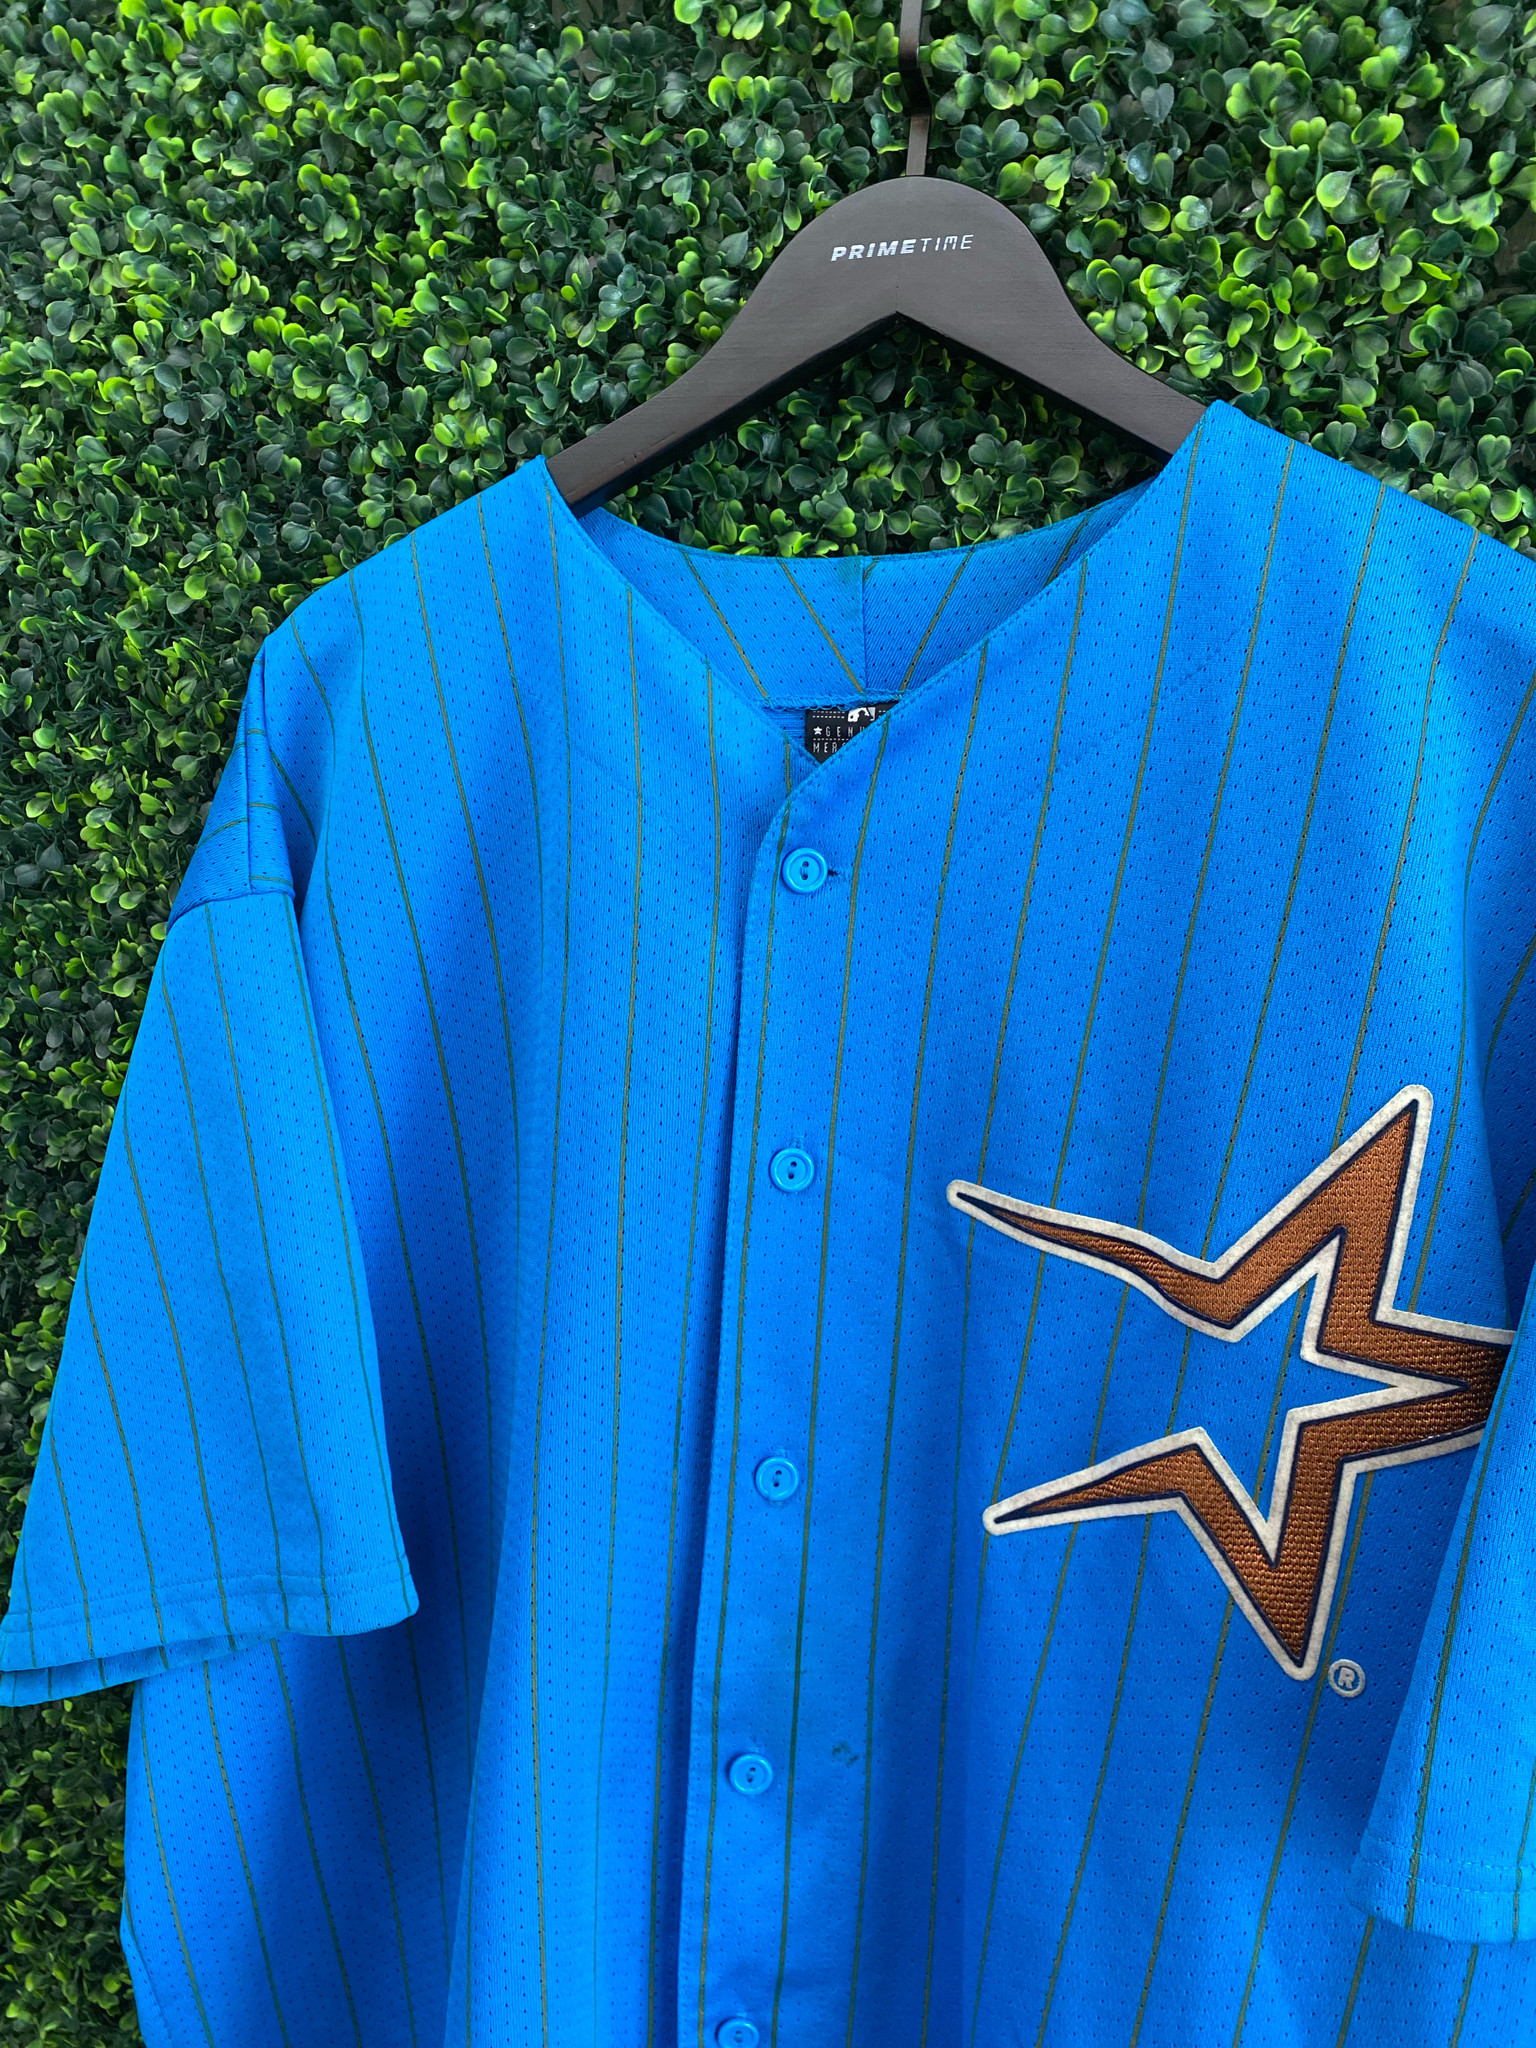 Houston Astros MLB Baseball Jersey Shirt Flower - Bluefink